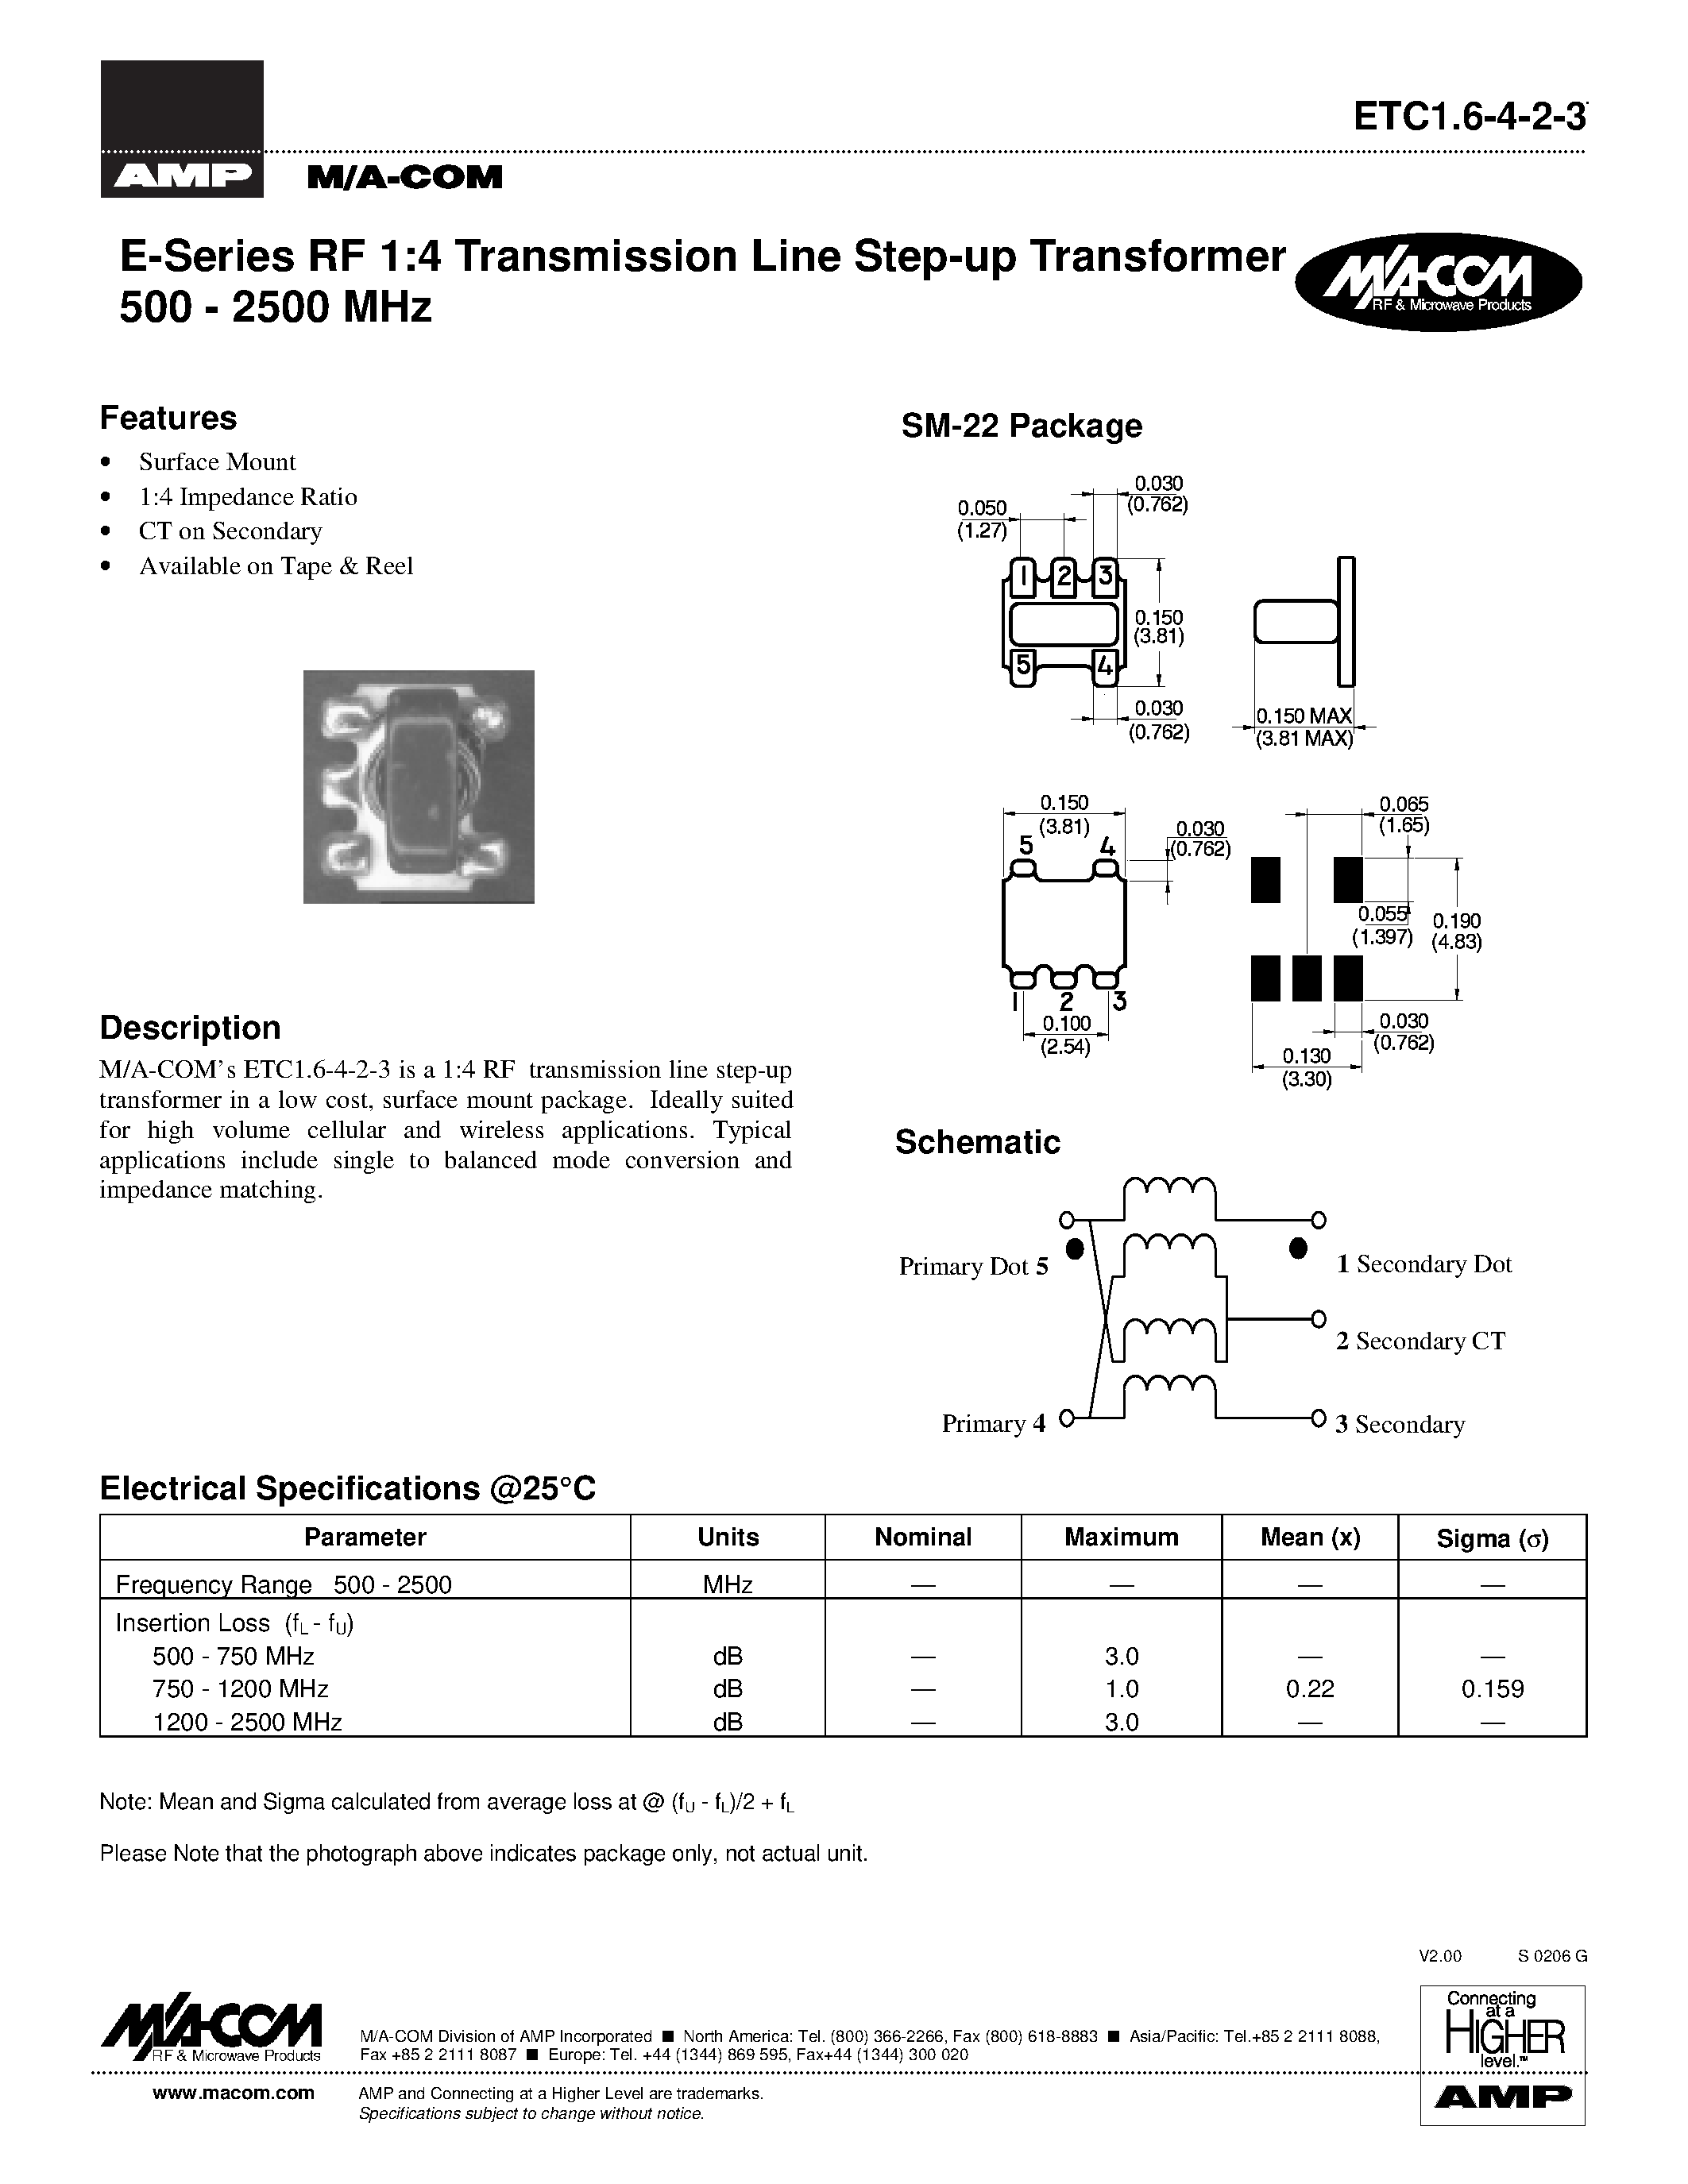 Datasheet ETC16-4-2-3 - E-Series RF 1:4 Transmission Line Step-up Transformer 500 - 2500 MHz page 1